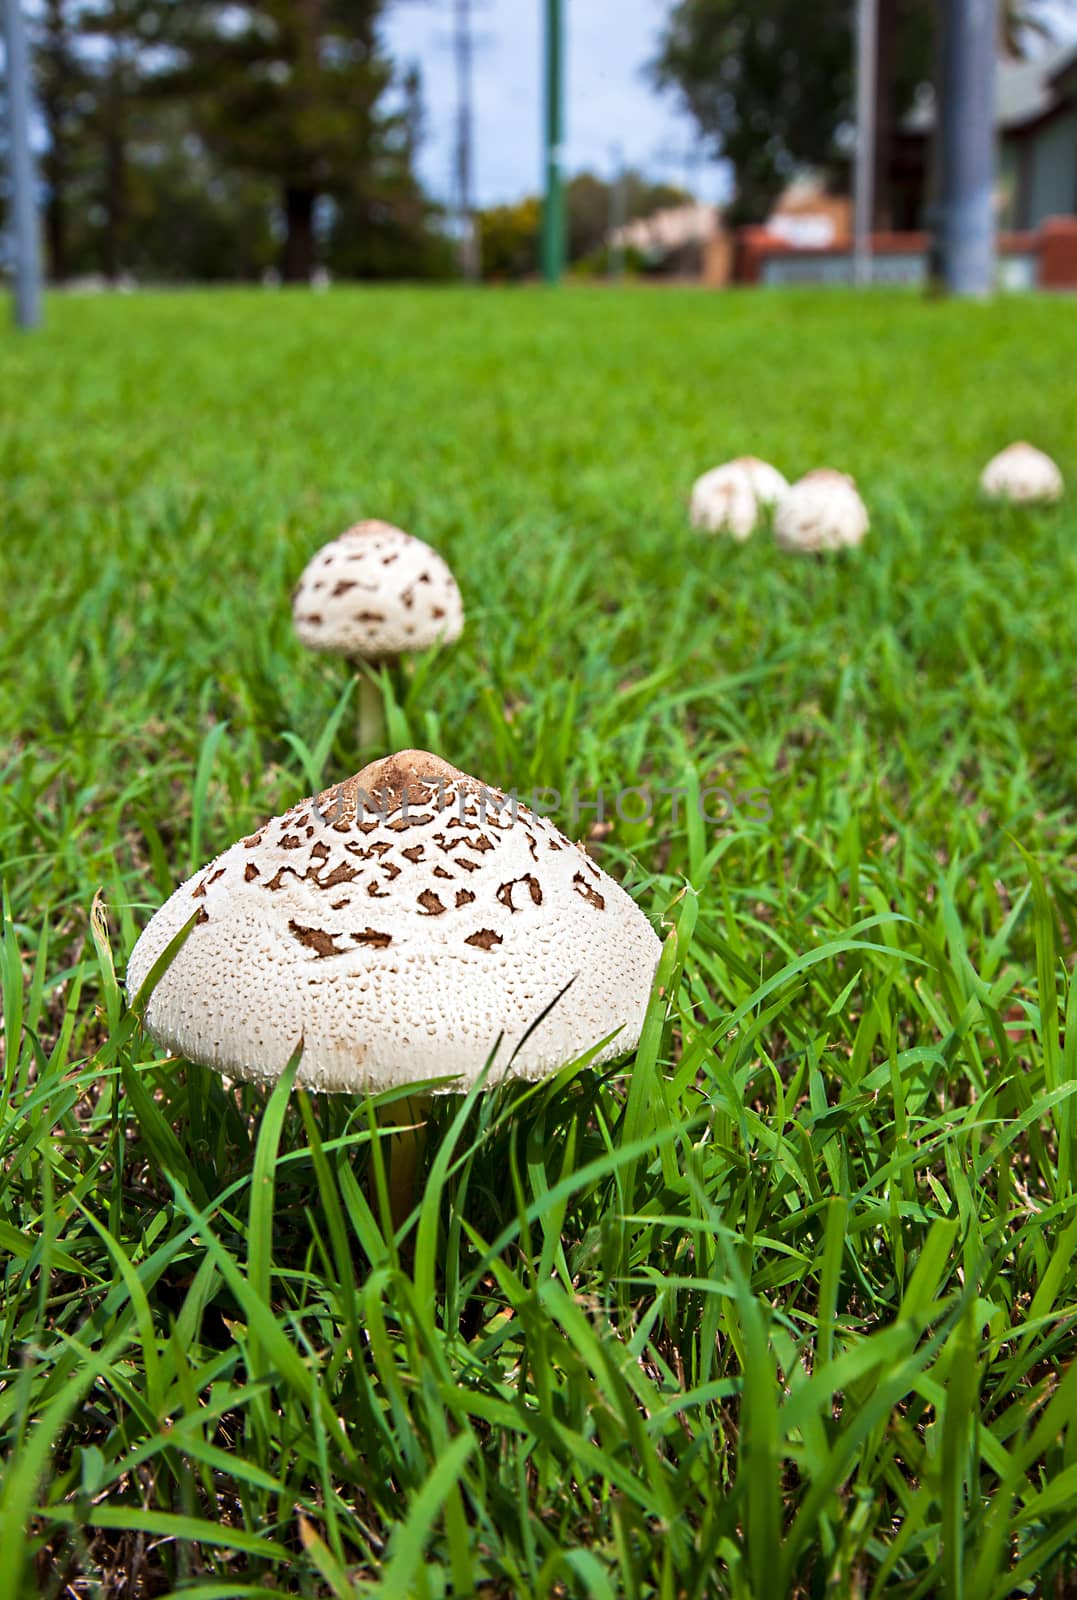 Mushrooms in New Soth Wales Australia Umbrella mushrooms by Makeral